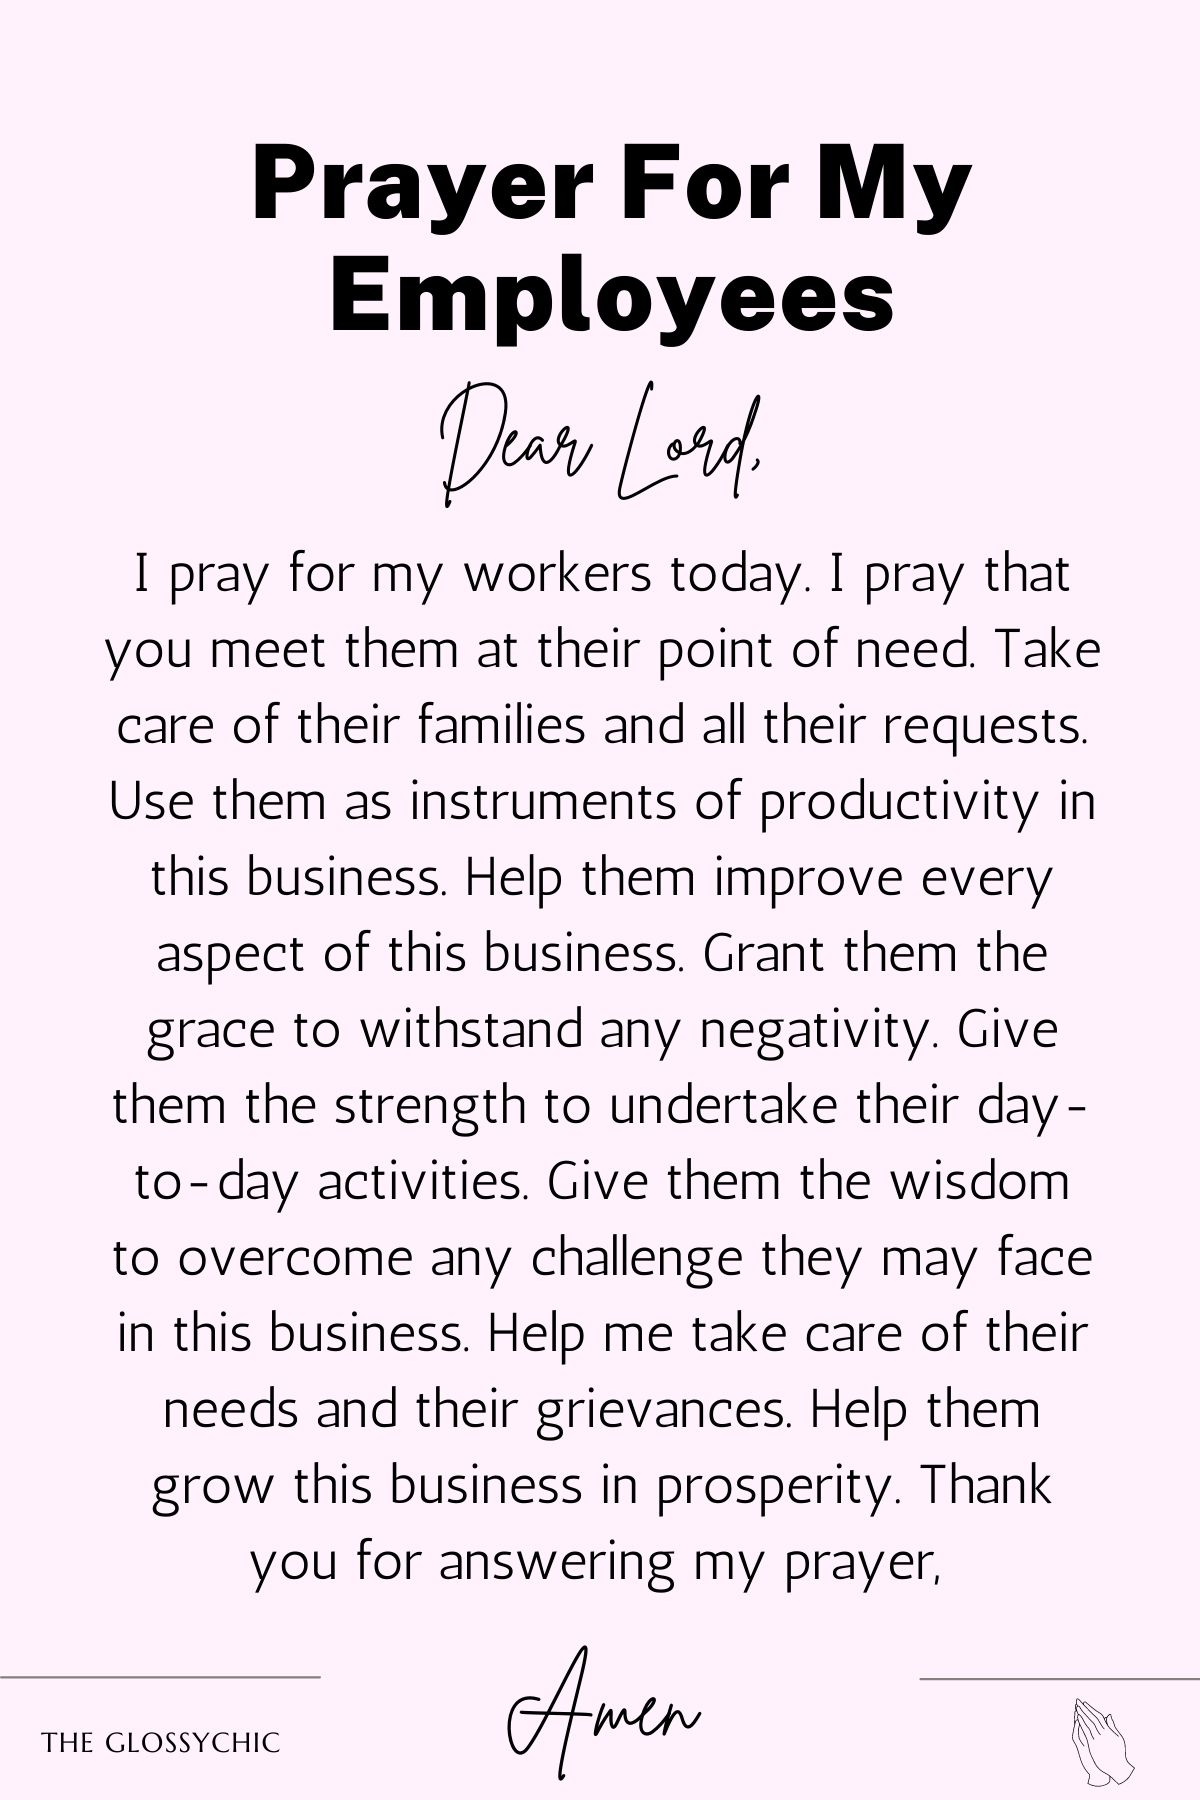 Prayer for my employees